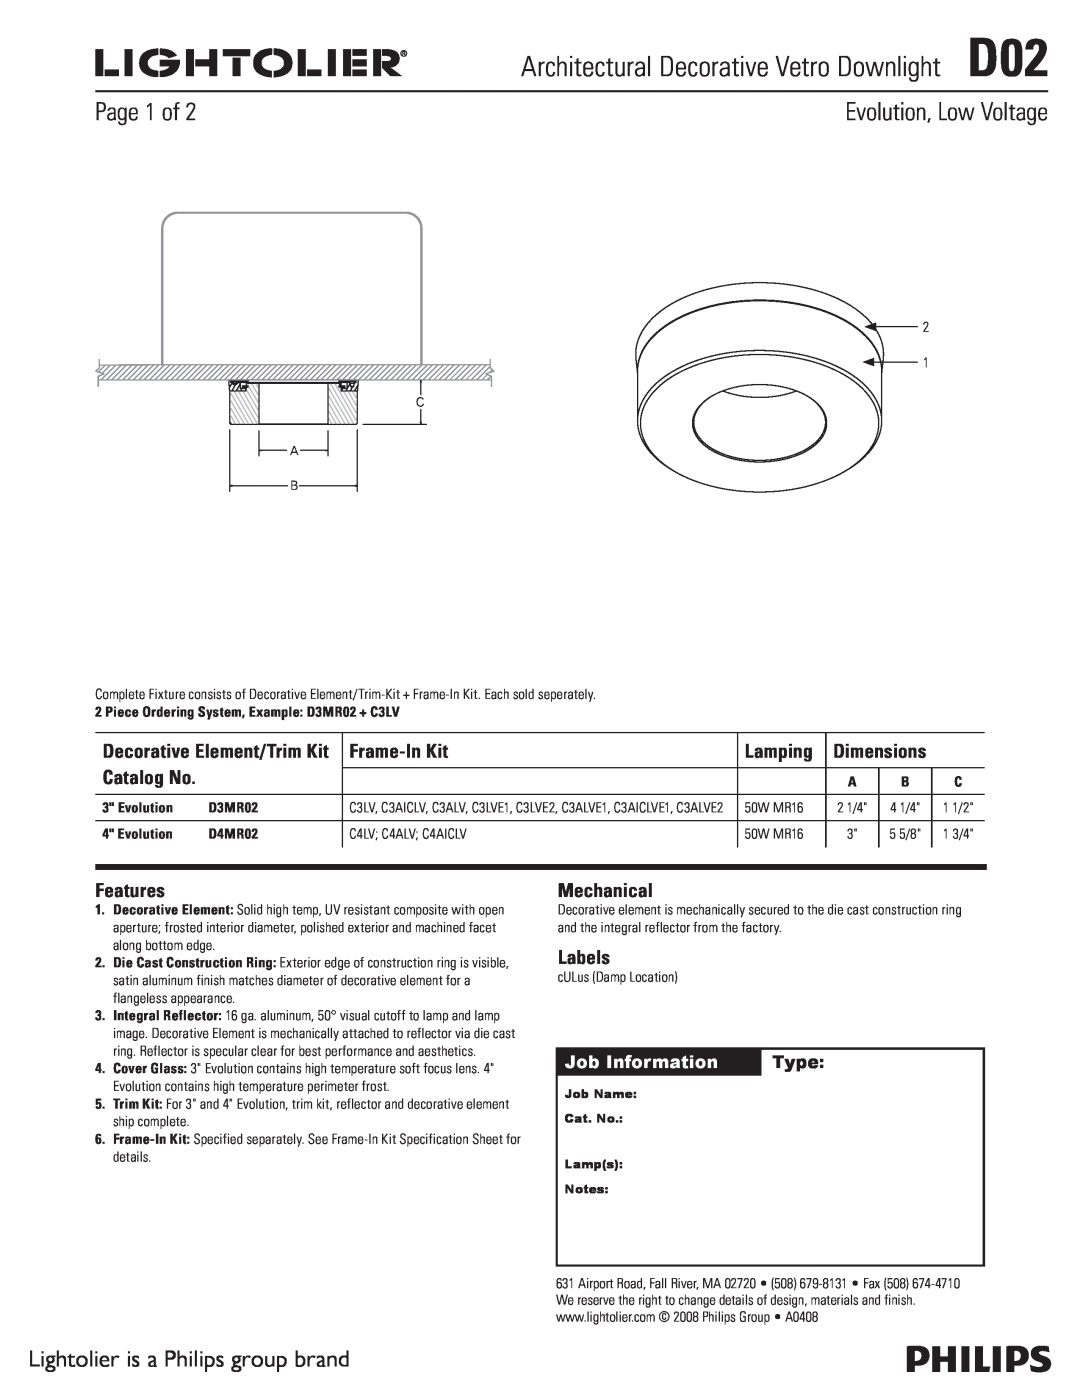 Lightolier dimensions Architectural Decorative Vetro DownlightD02, Evolution, Low Voltage, Page 1 of, Job Information 